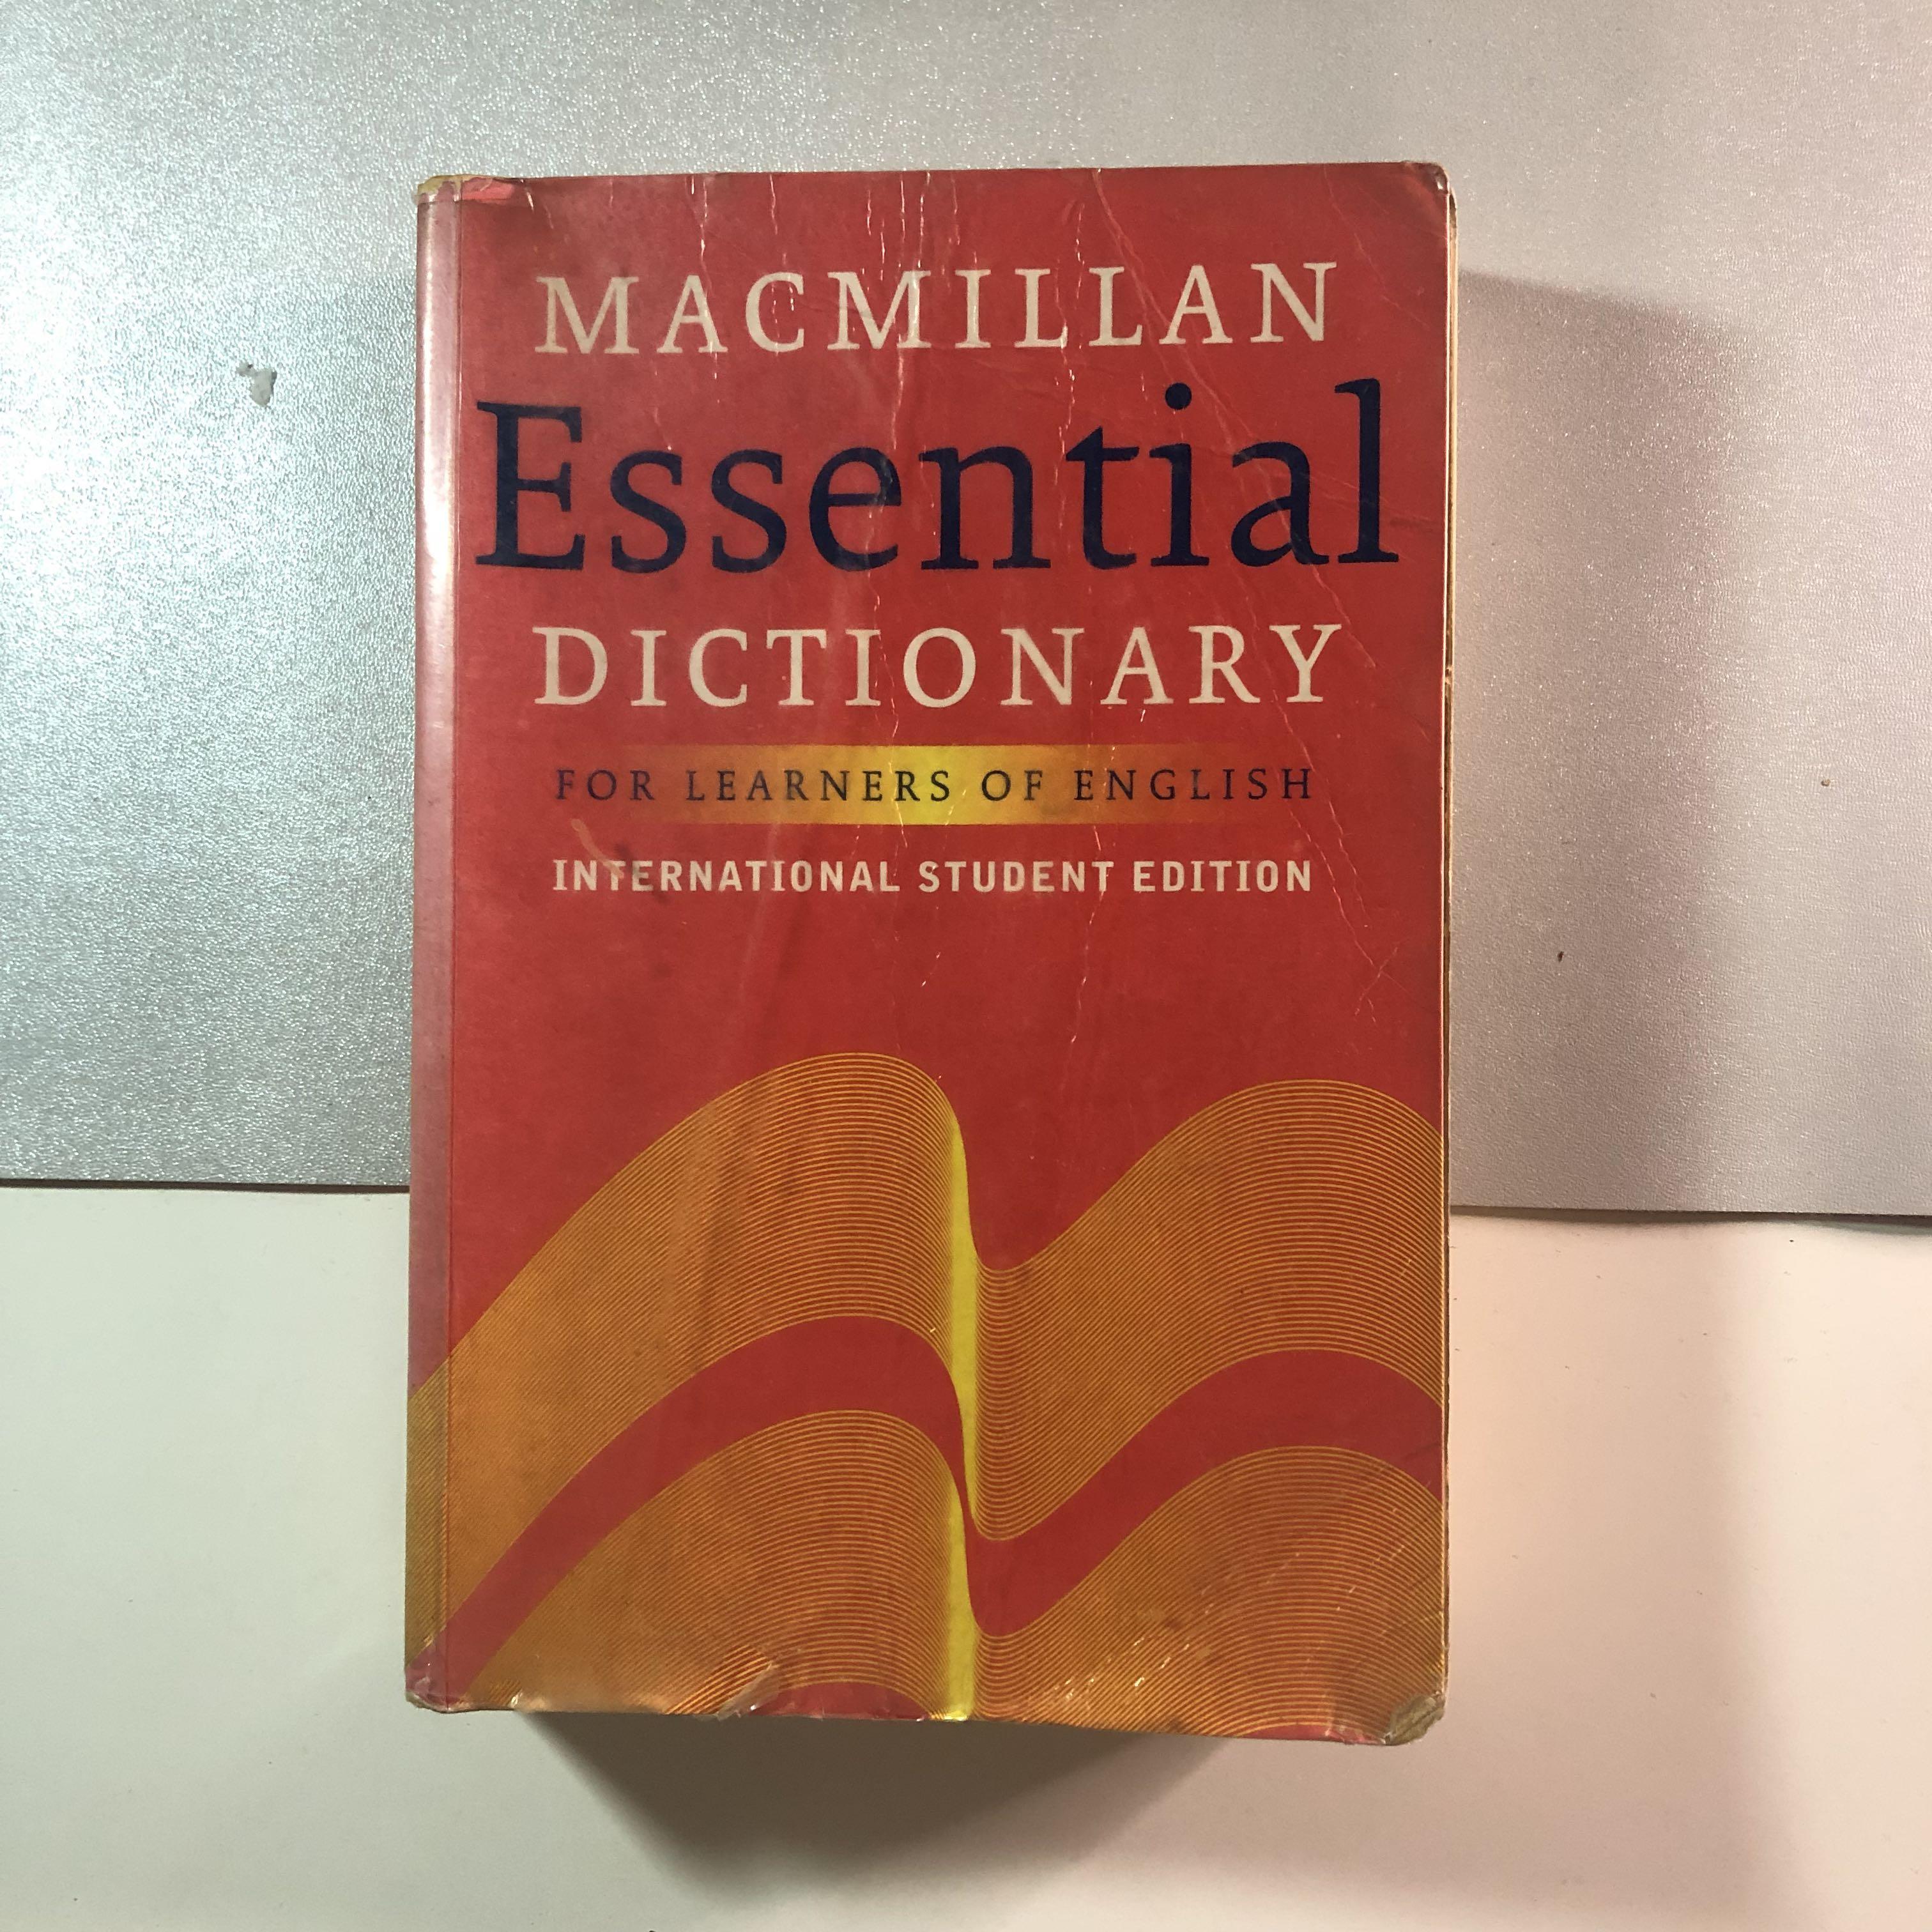 Macmillan Essential Dictionary